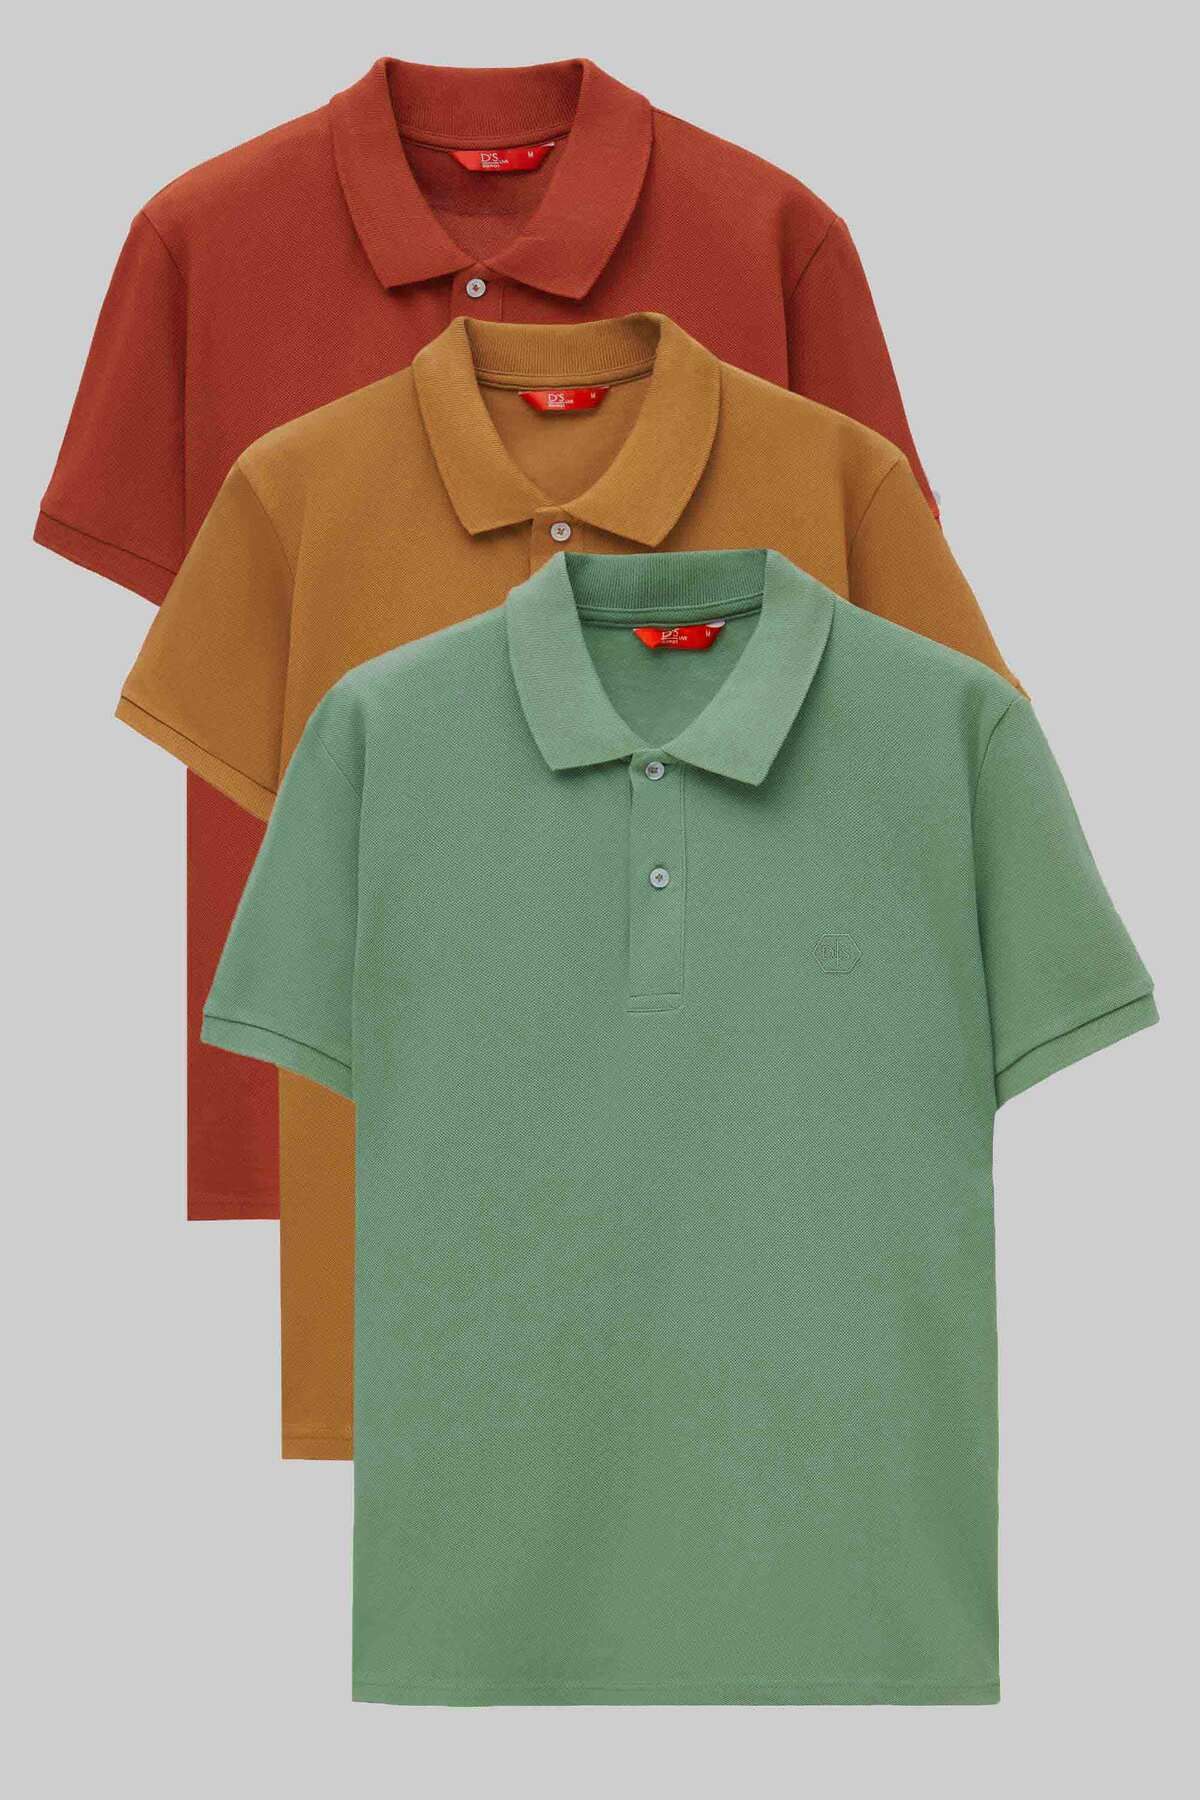 D'S Damat Ds Damat Regular Fit Kiremit/Tütün/Açık Yeşil Pike Dokulu %100 Pamuk Polo Yaka T-Shirt